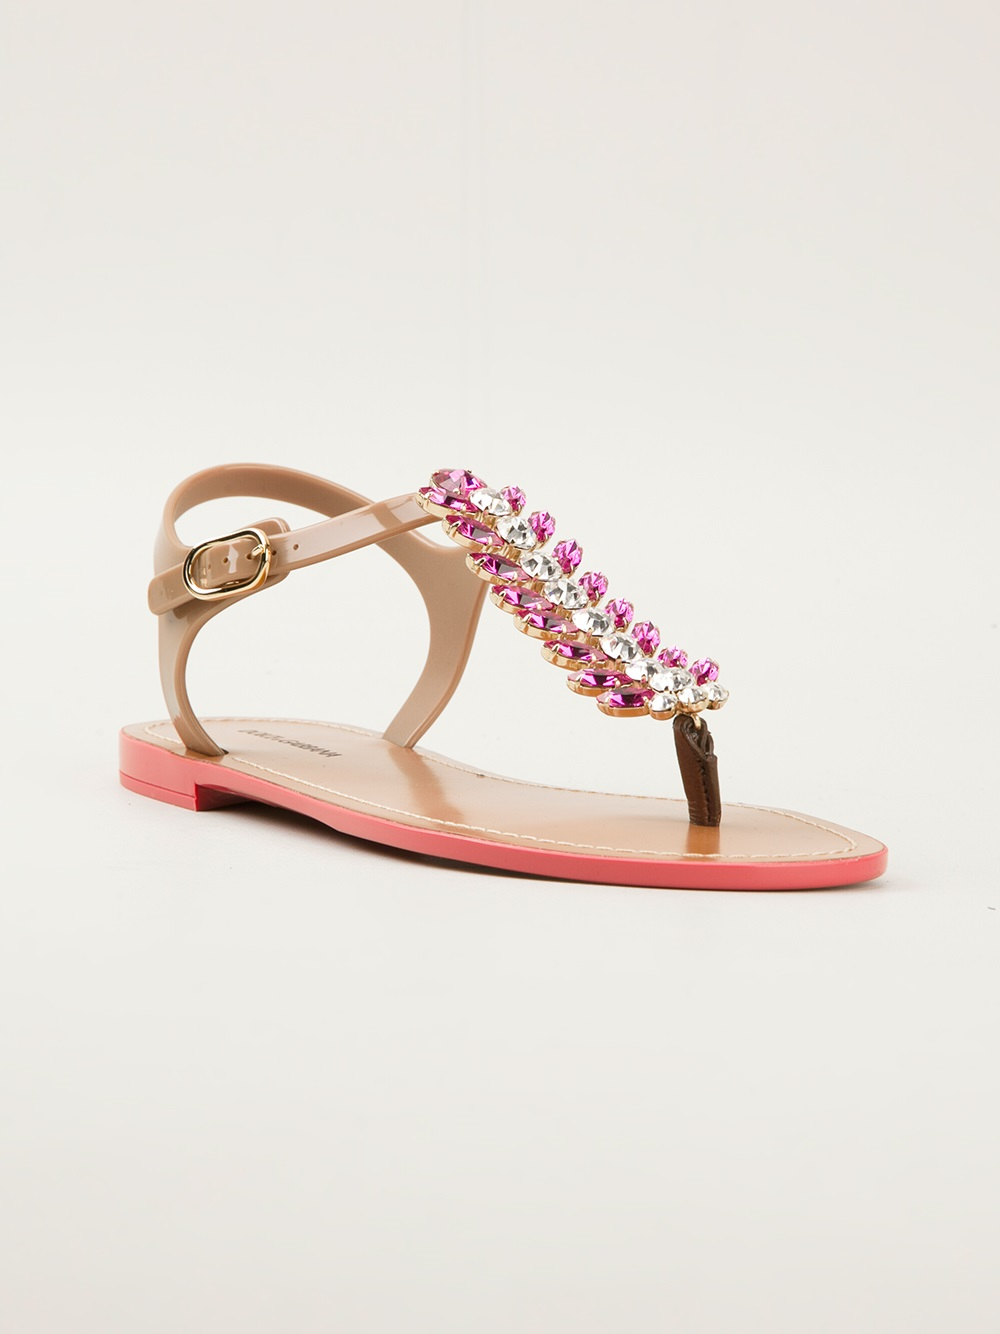 Lyst - Dolce & Gabbana Embellished Sandals in Brown